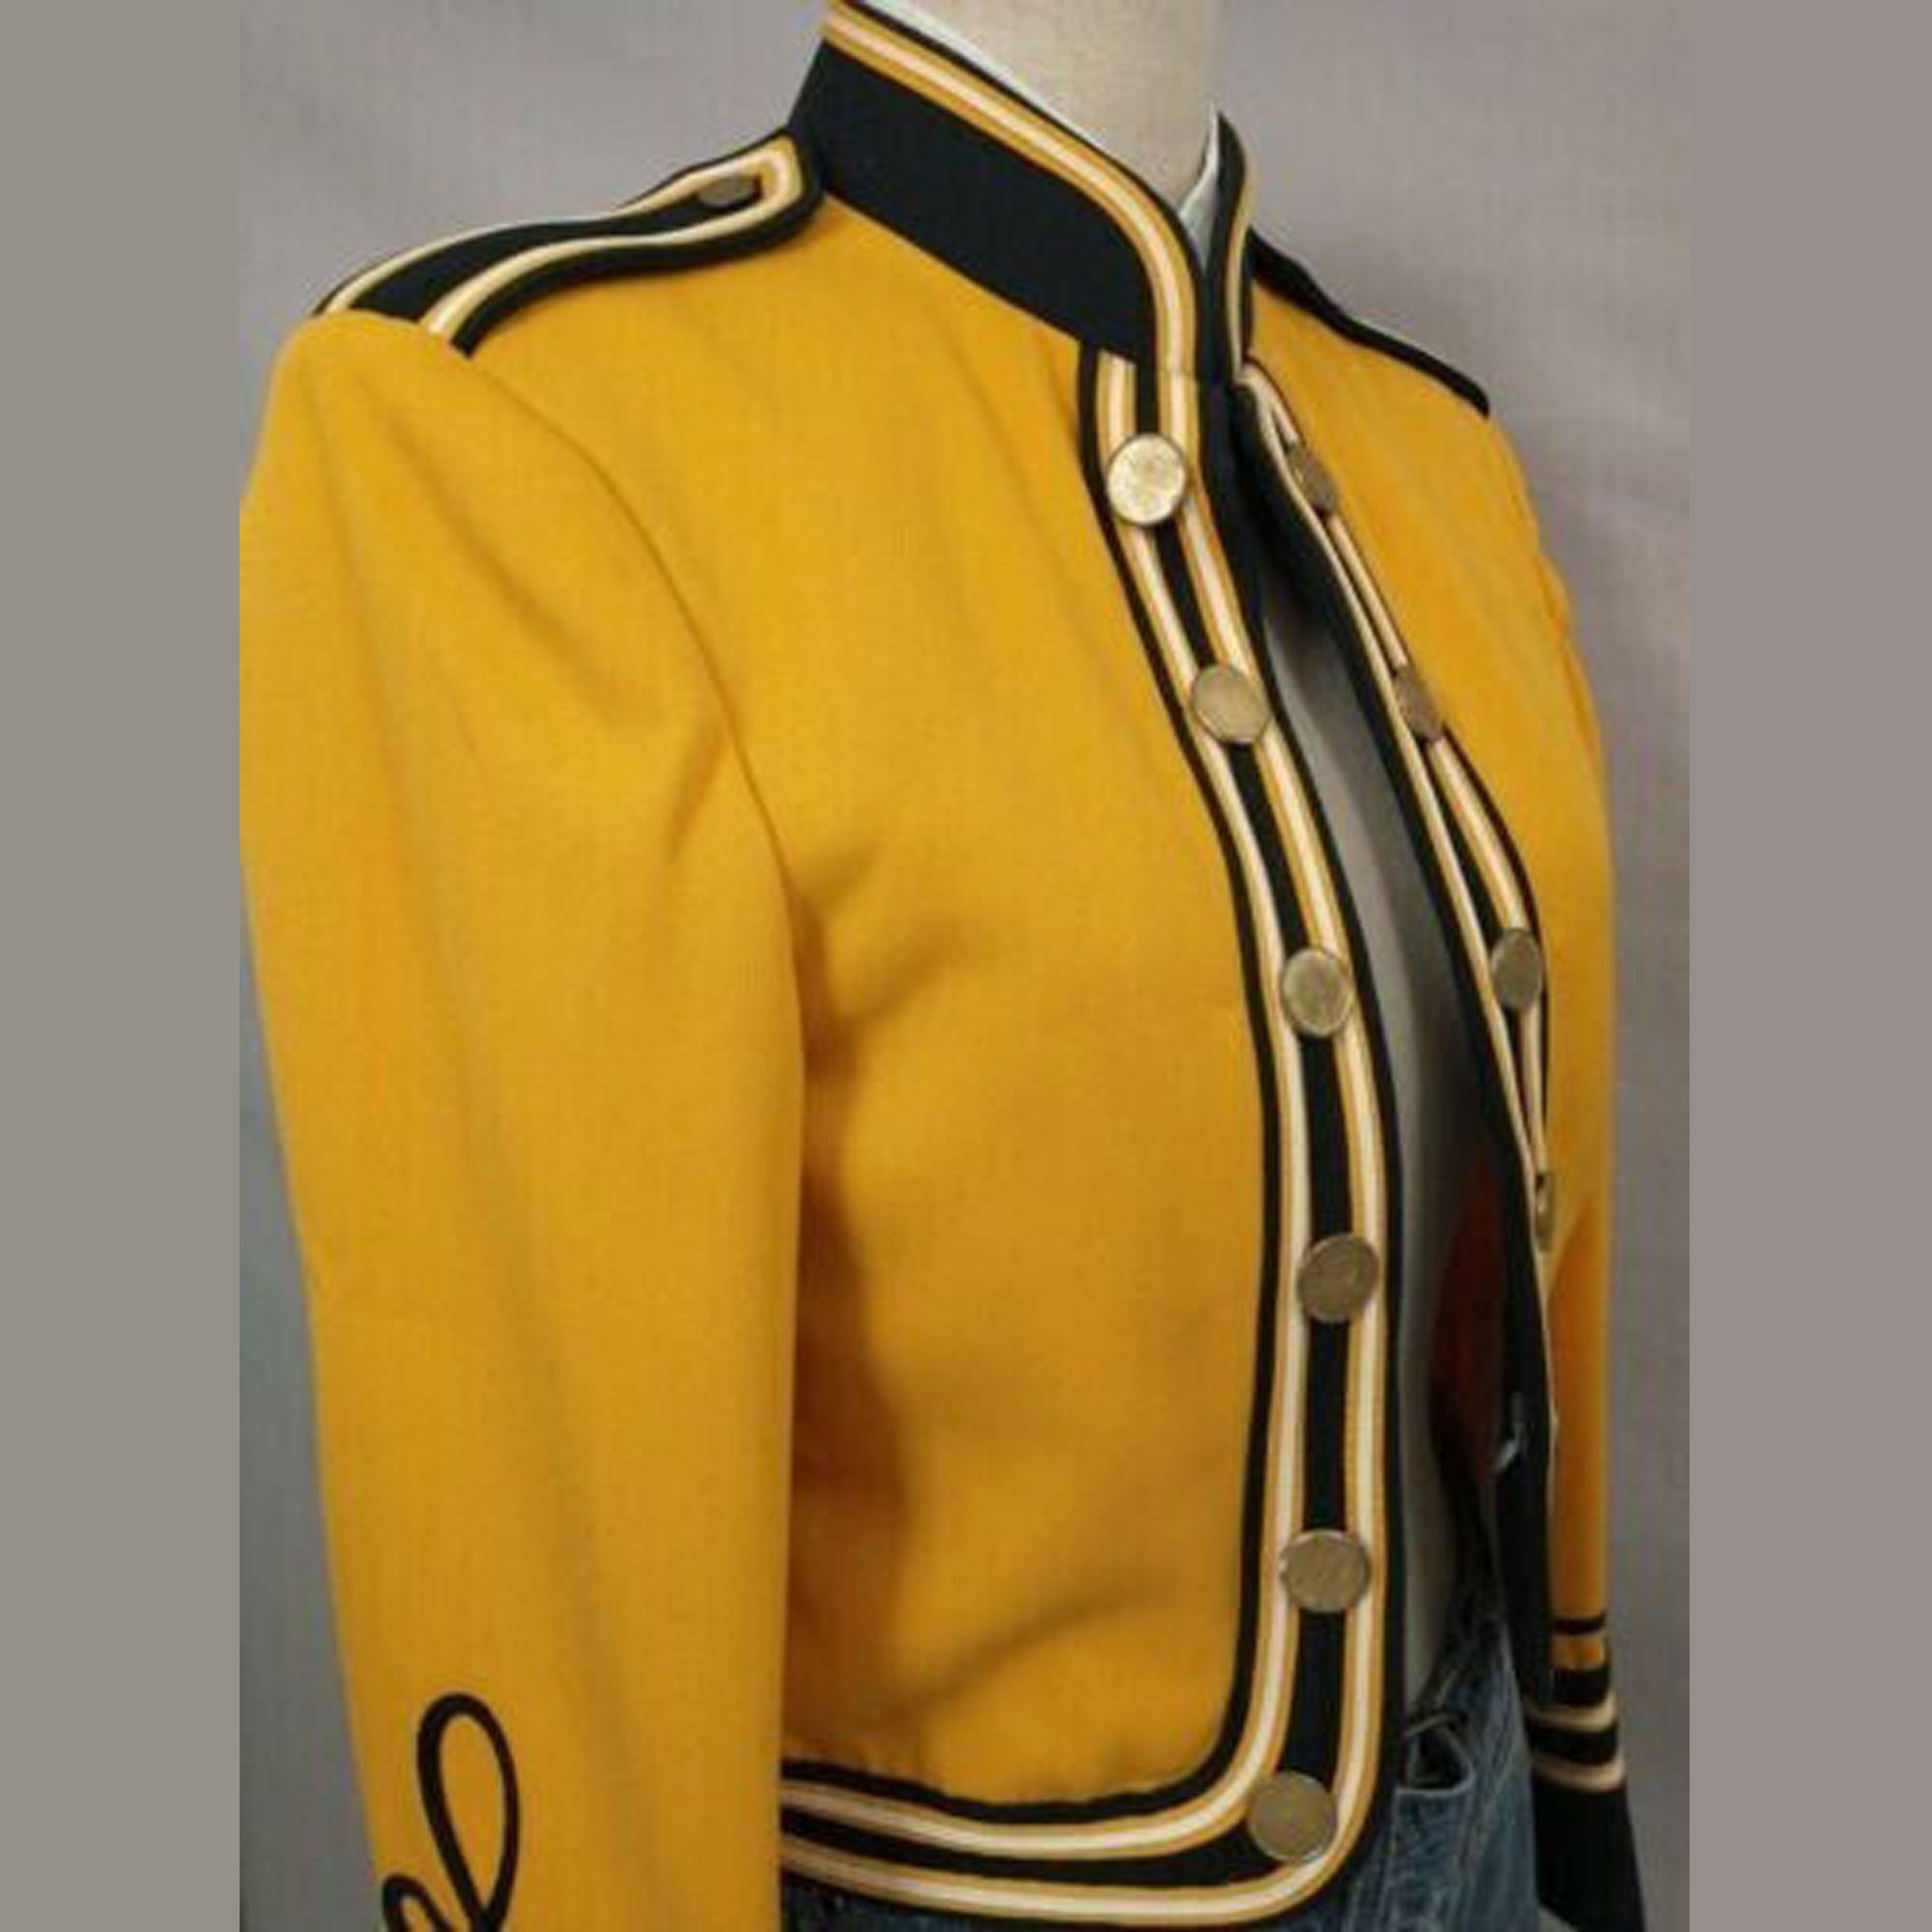 New Men's Yellow Band Jacket Military Front Look Short coat - 457